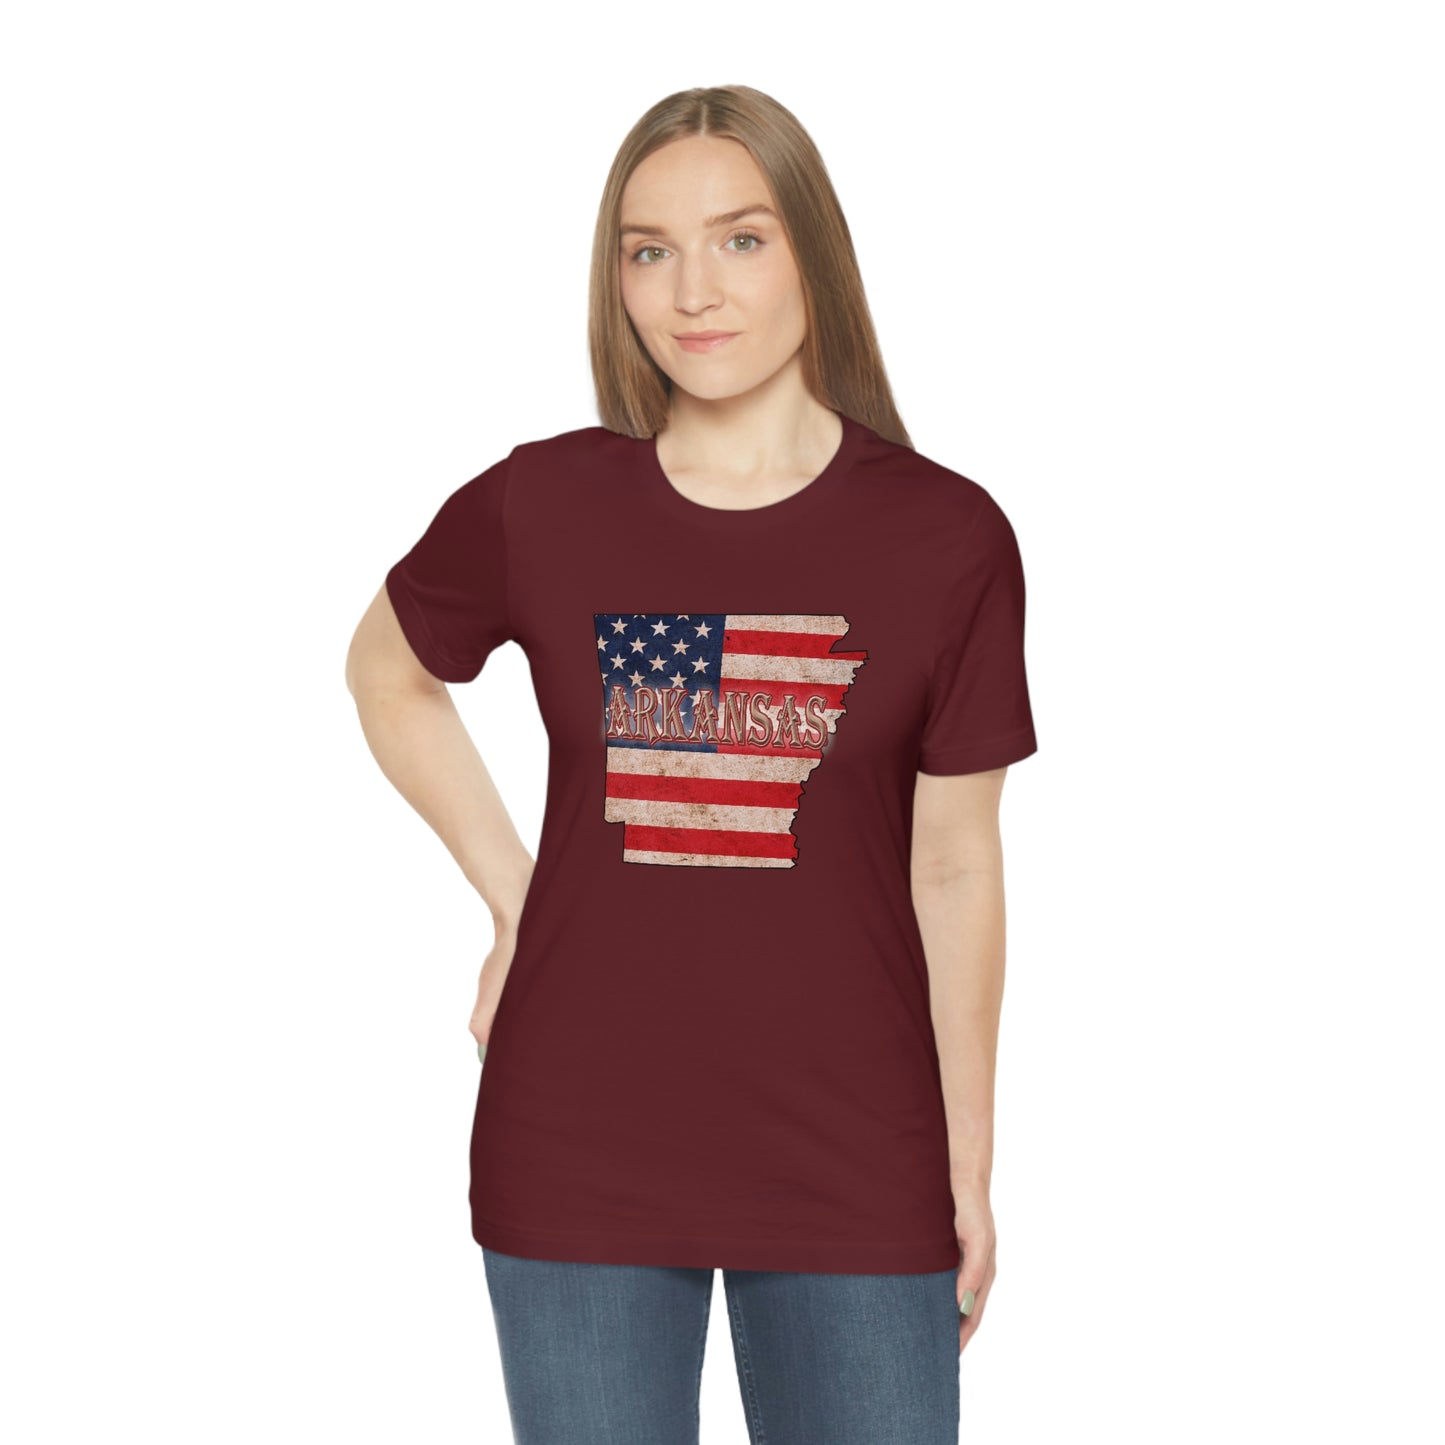 Arkansas AR US Flag Unisex Jersey Short Sleeve Tee Tshirt T-shirt